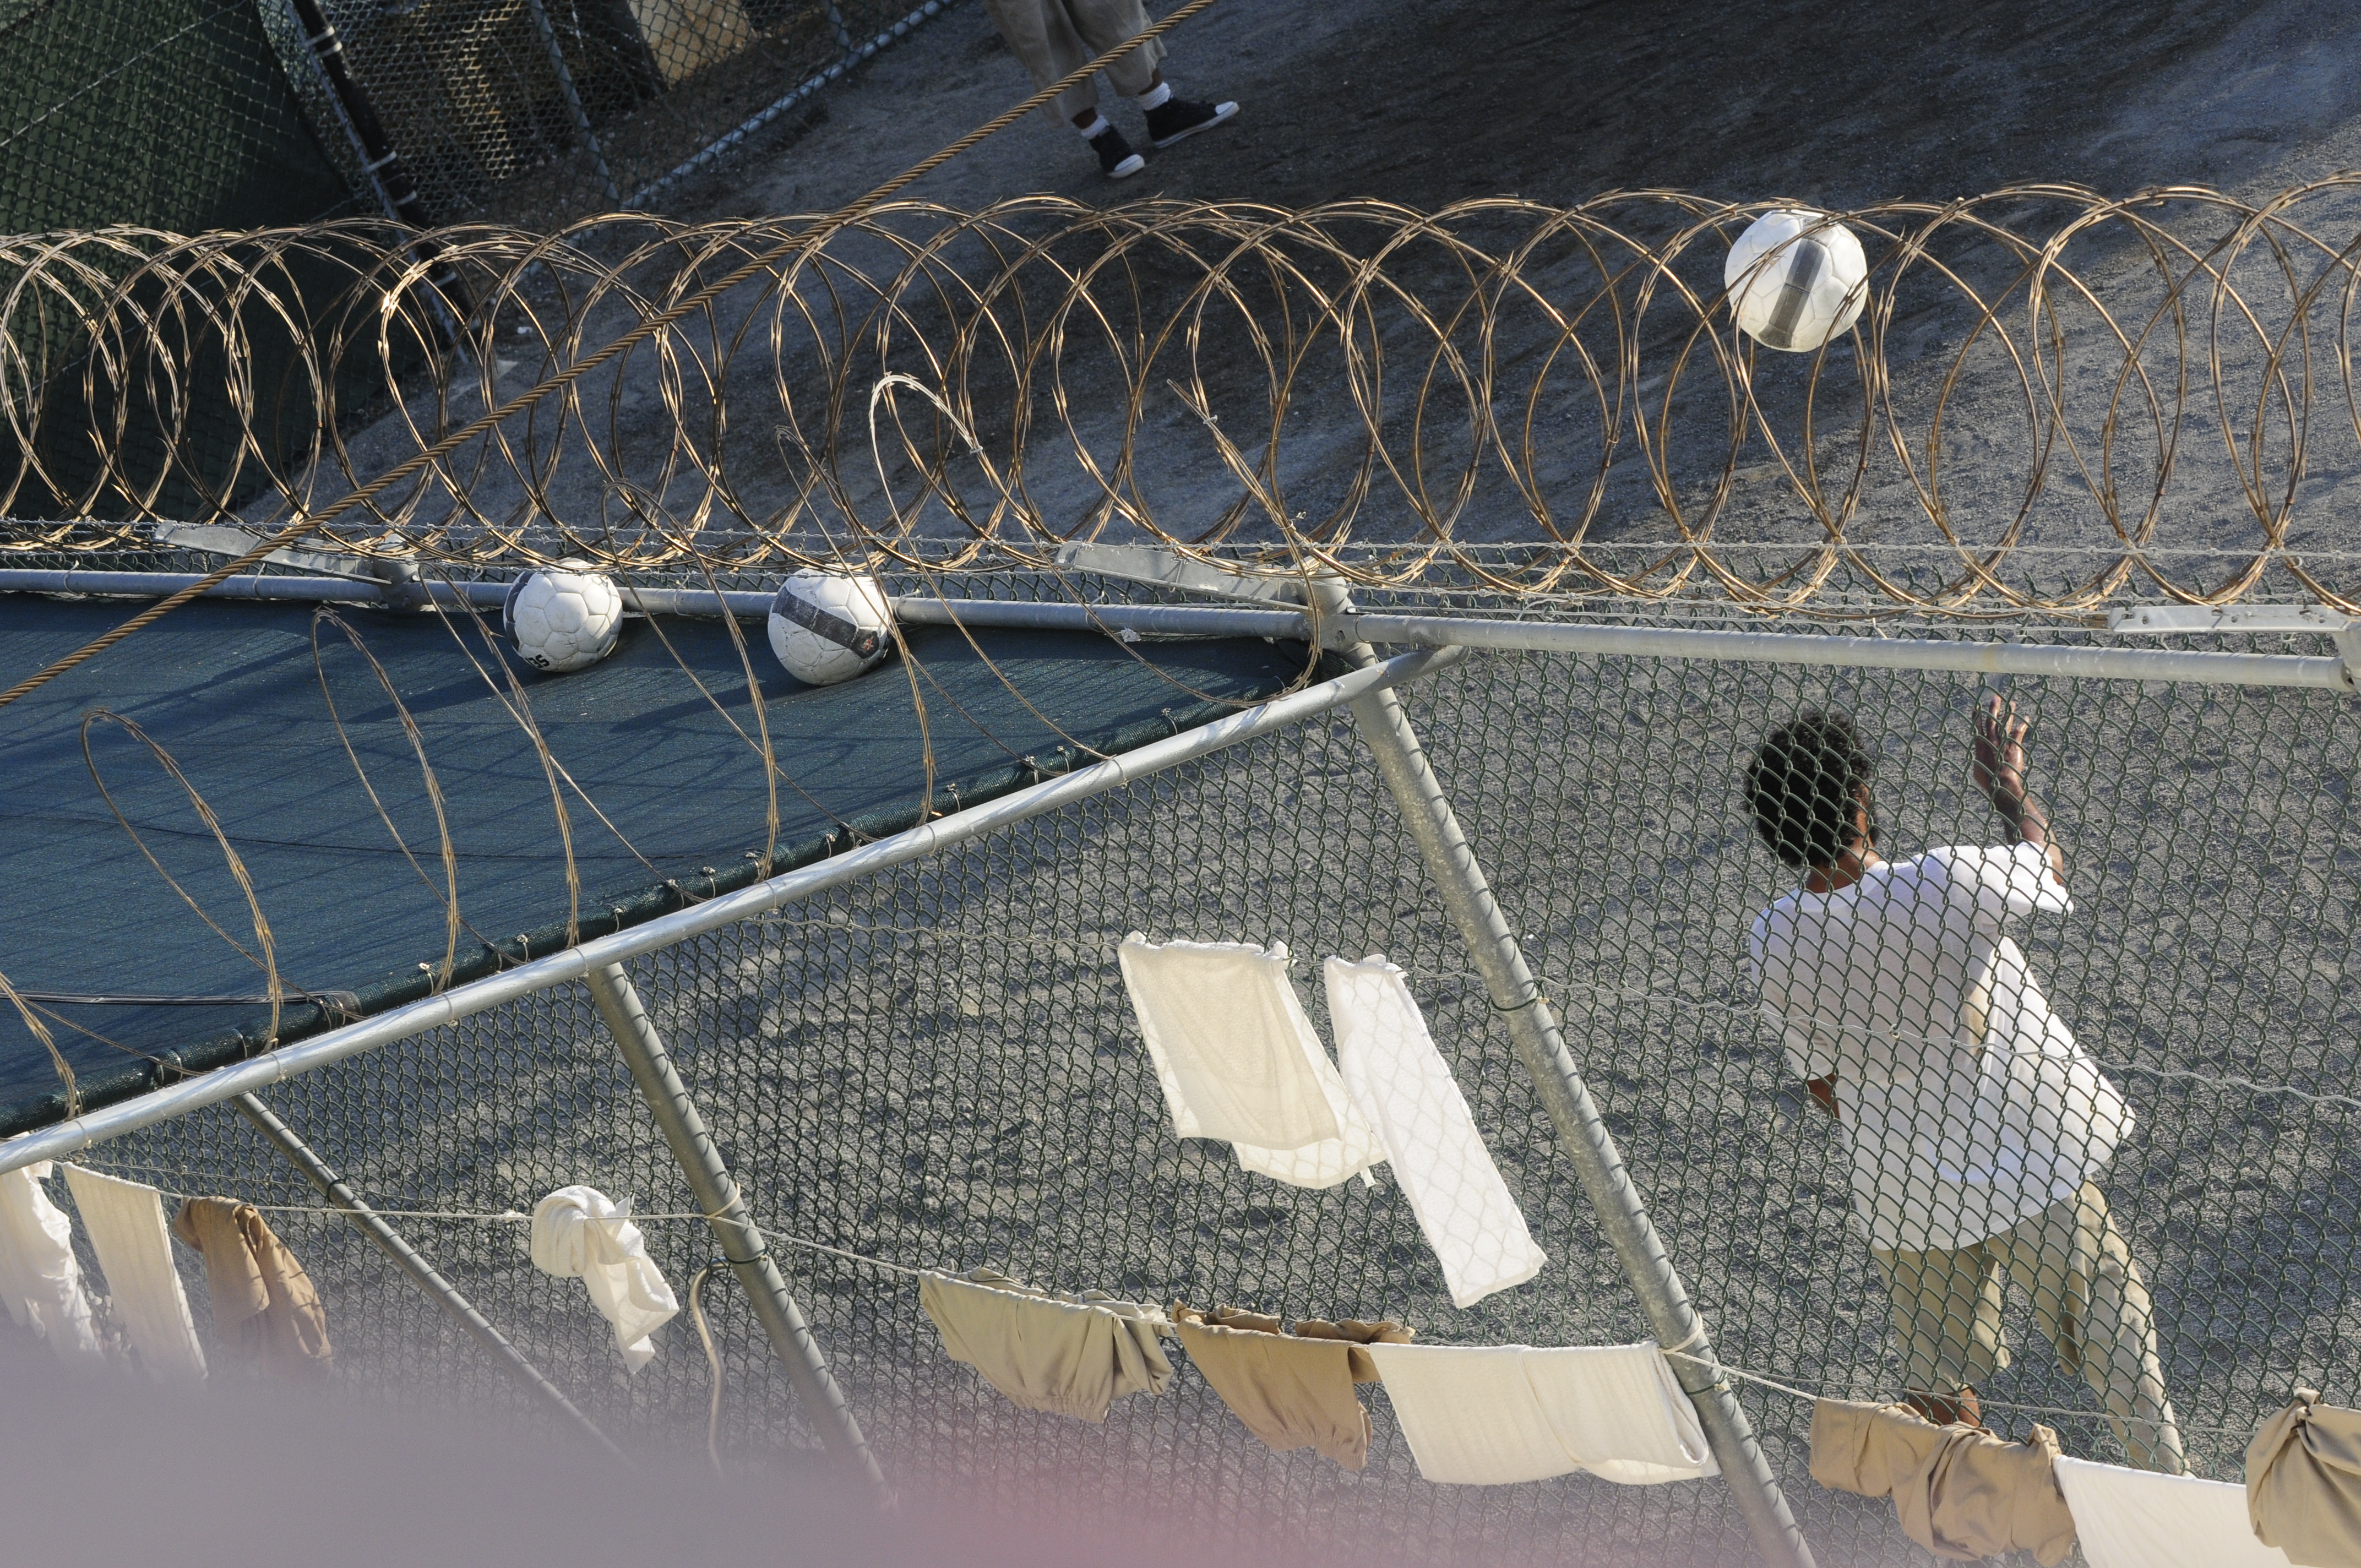 This Week in Guantánamo: 2013 and 2003 Thumbnail Image